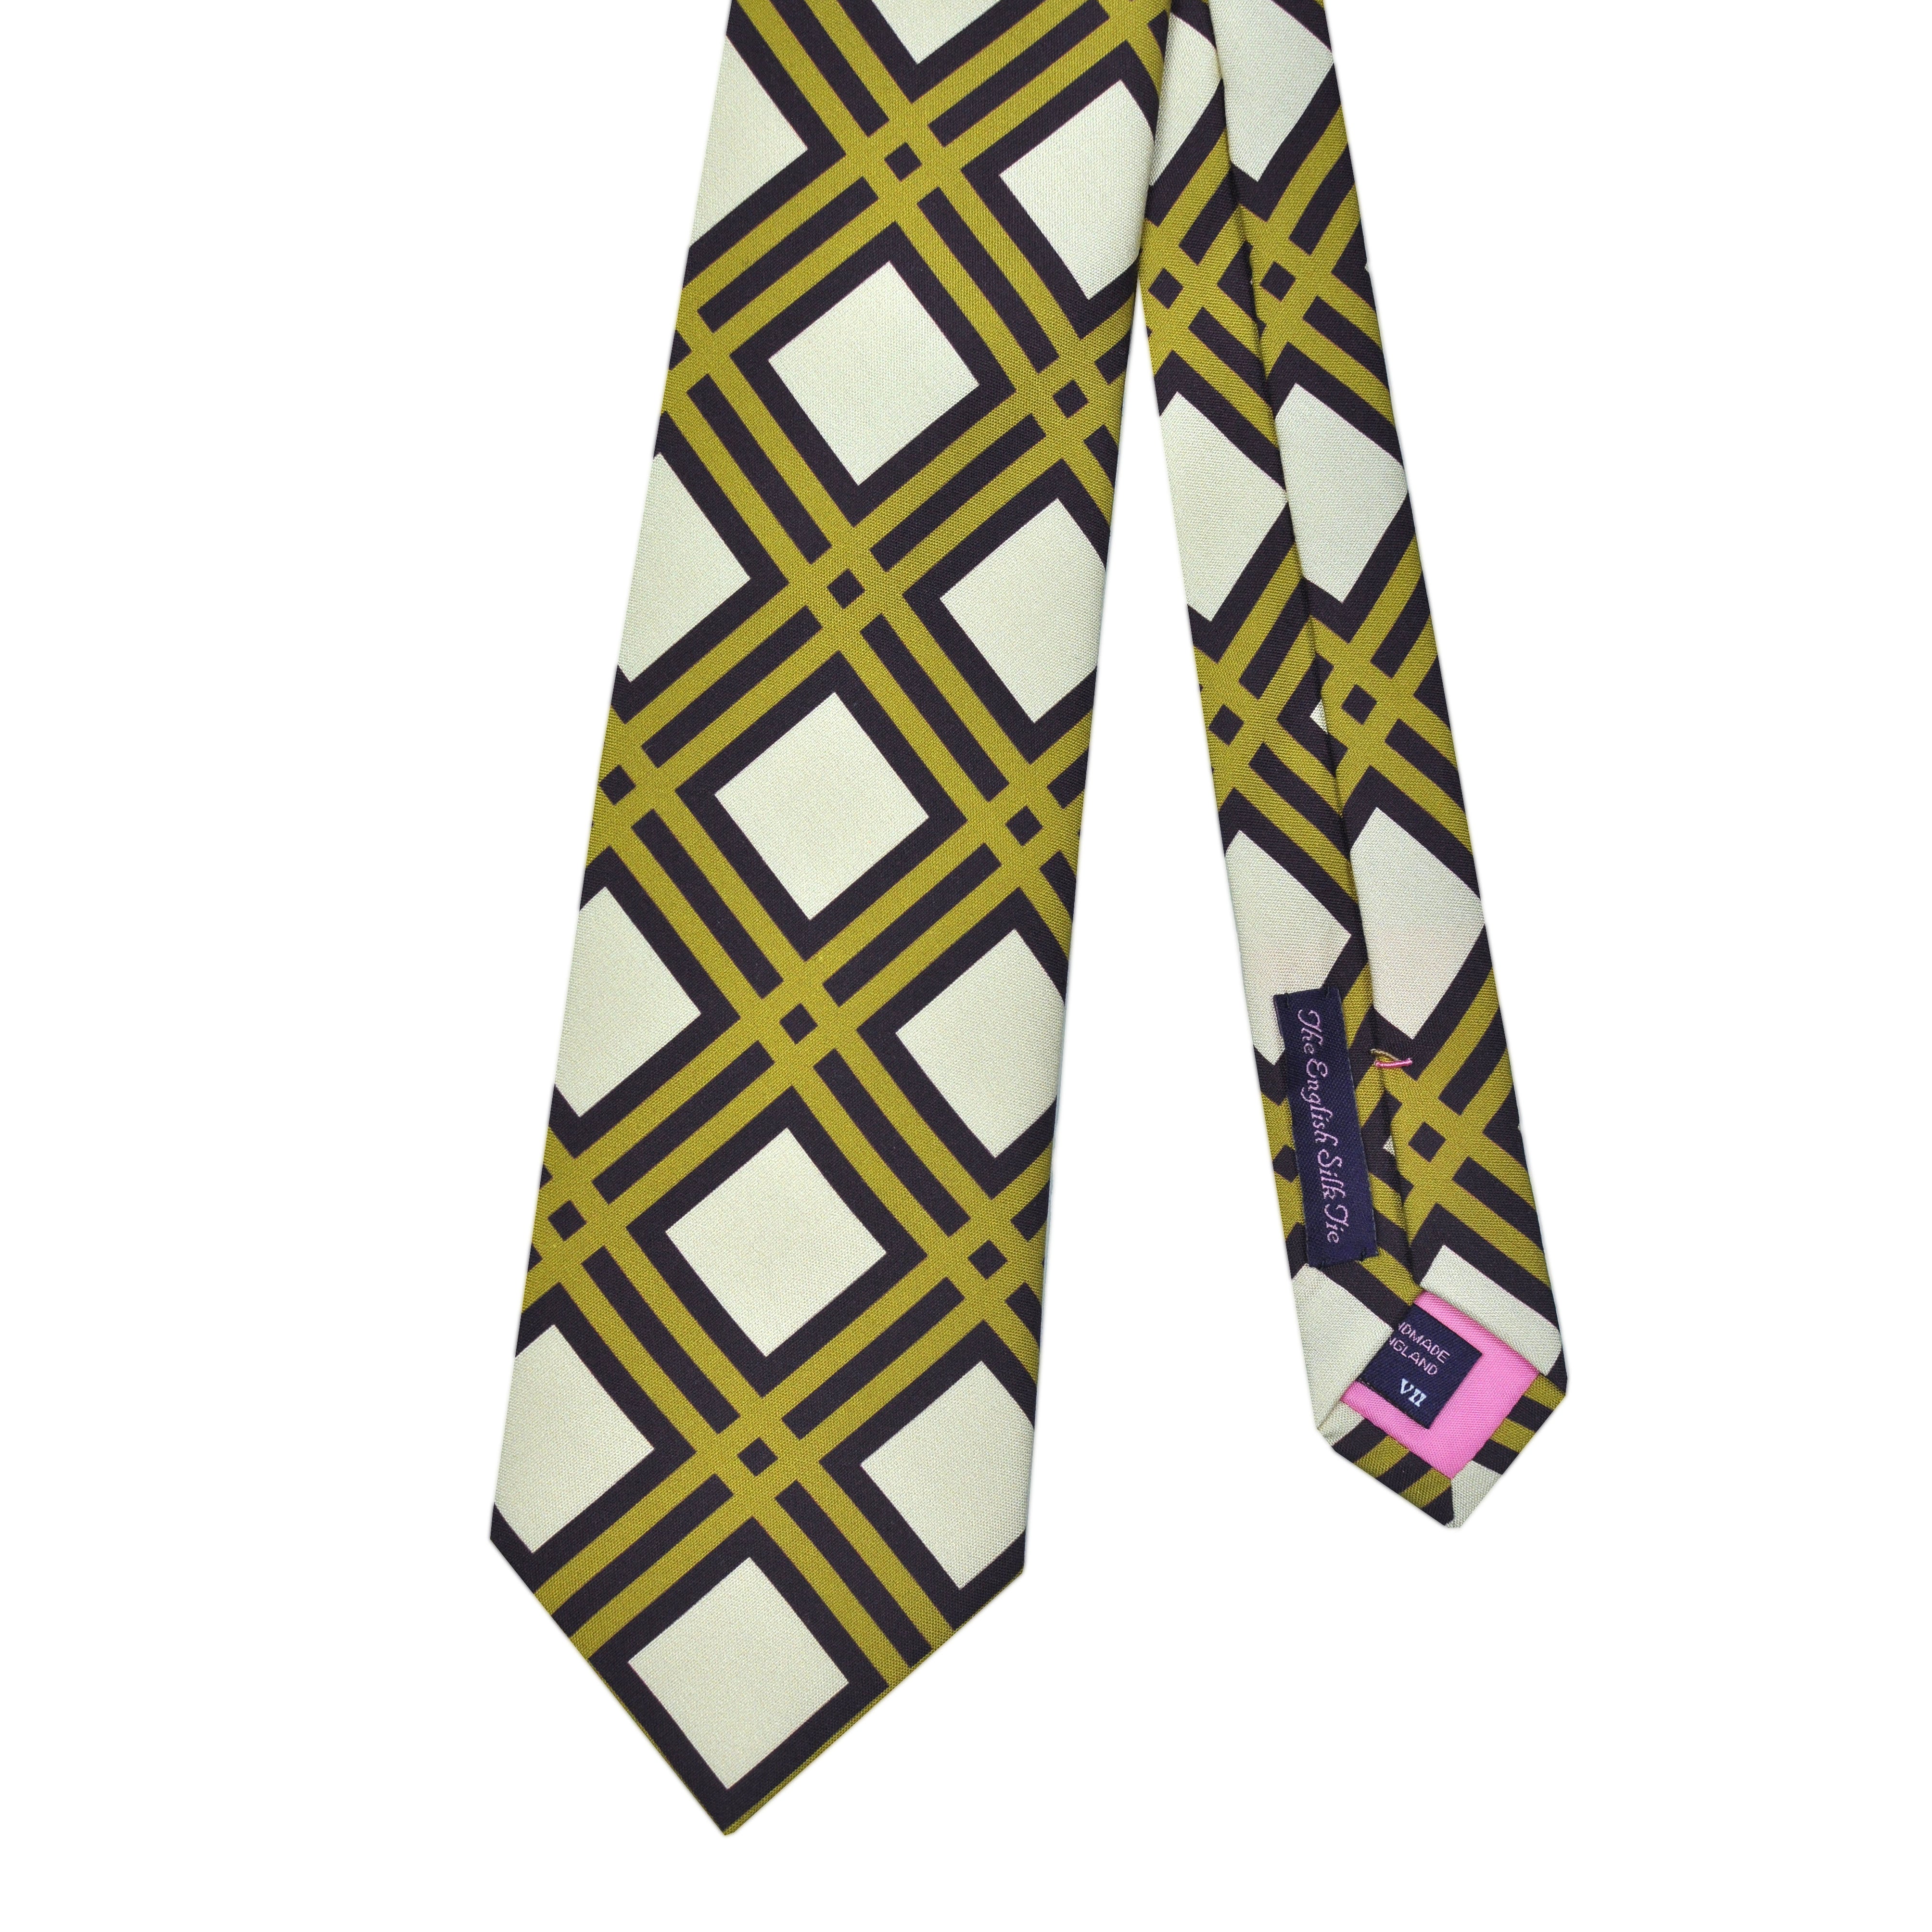 Lattice 'Dusty Silk' Print Tie in Mustard, Claret & Cream